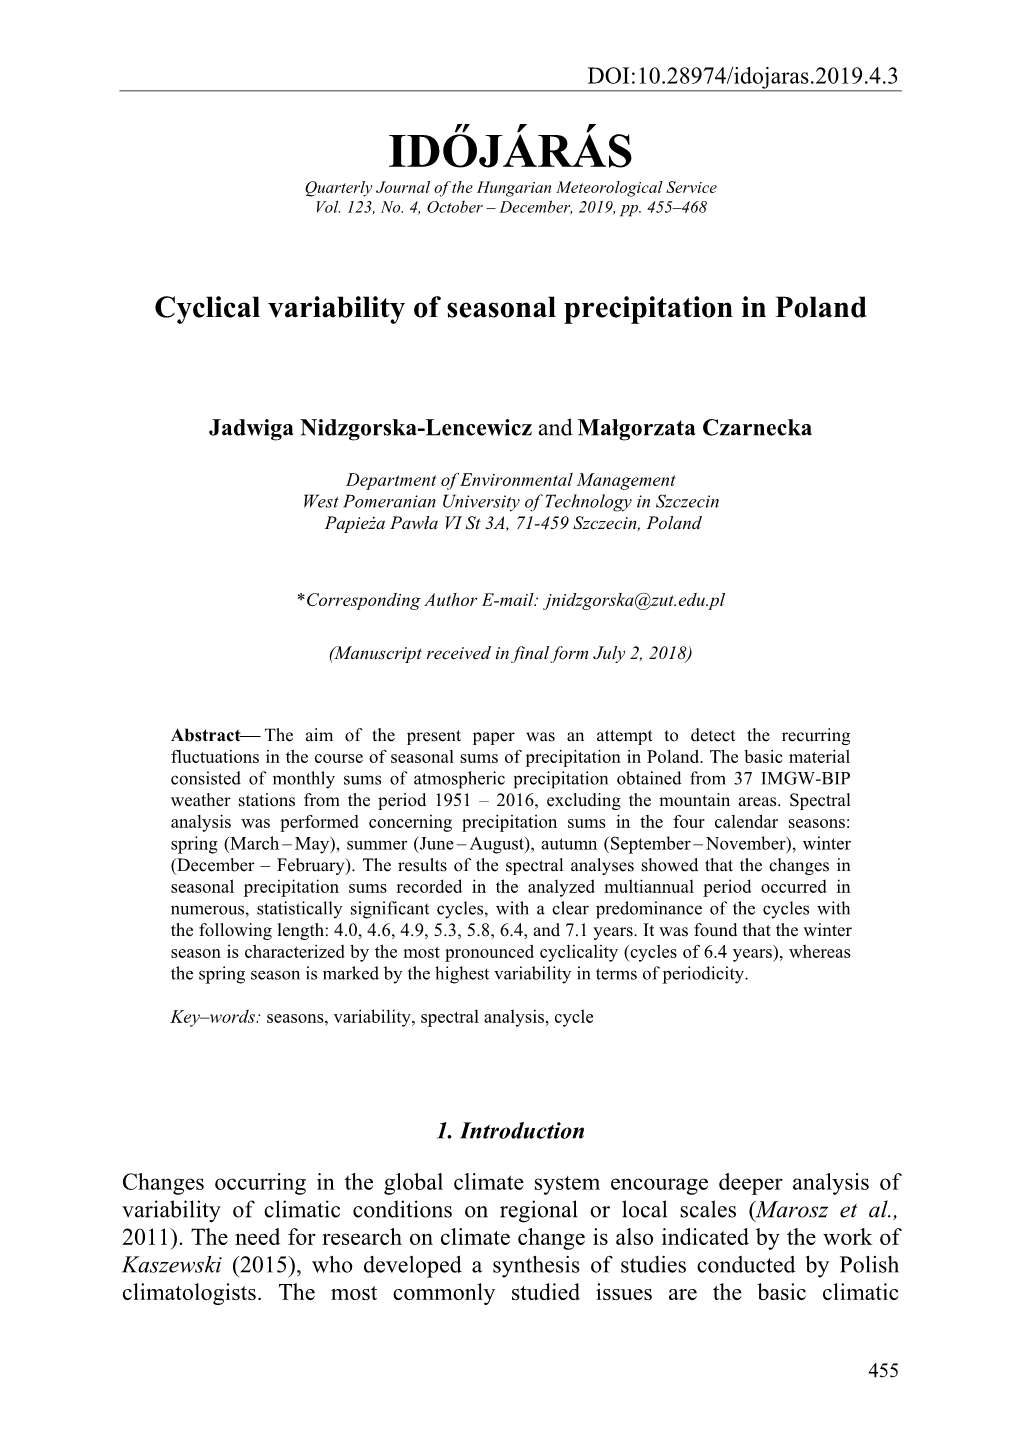 IDŐJÁRÁS Quarterly Journal of the Hungarian Meteorological Service Vol